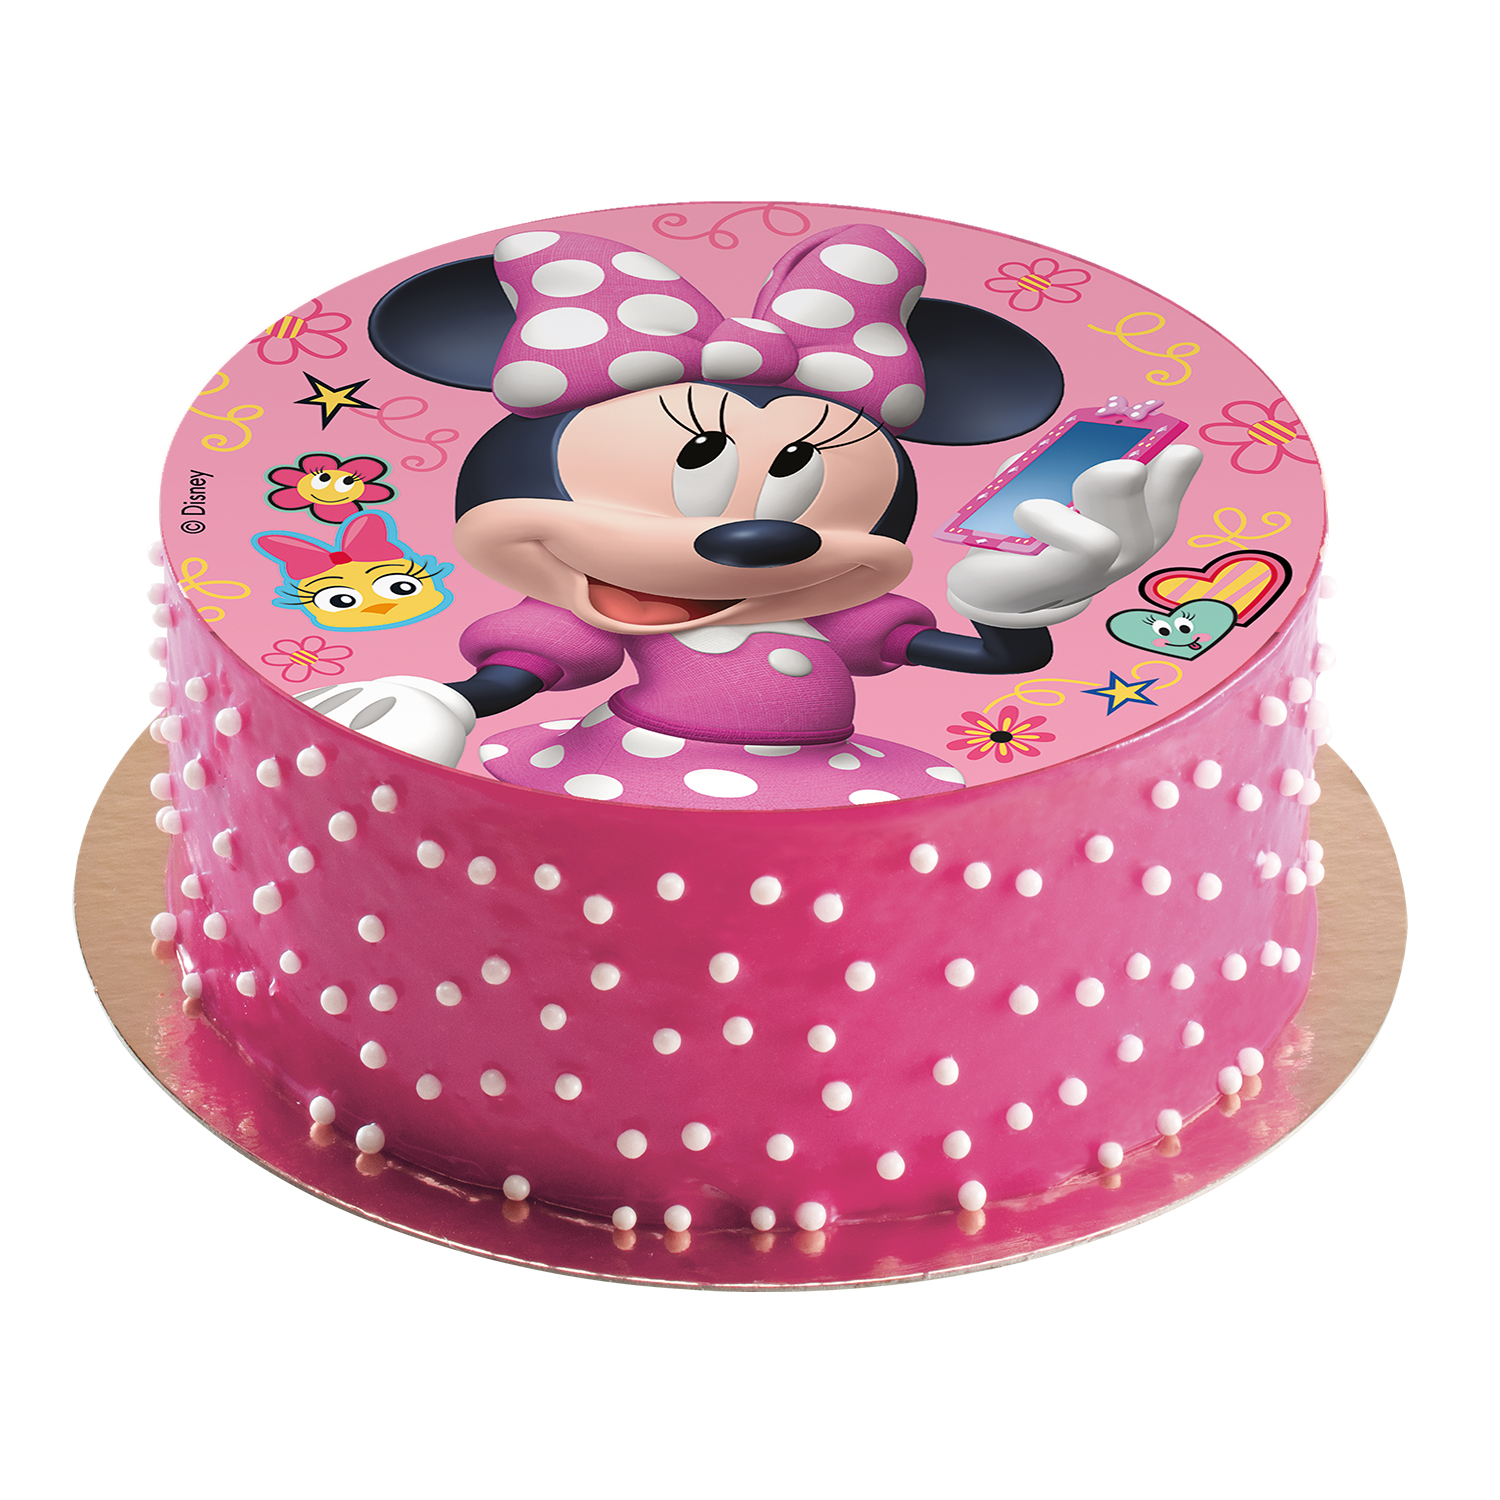 Fondánový obrázek Minnie Mouse 16cm dort